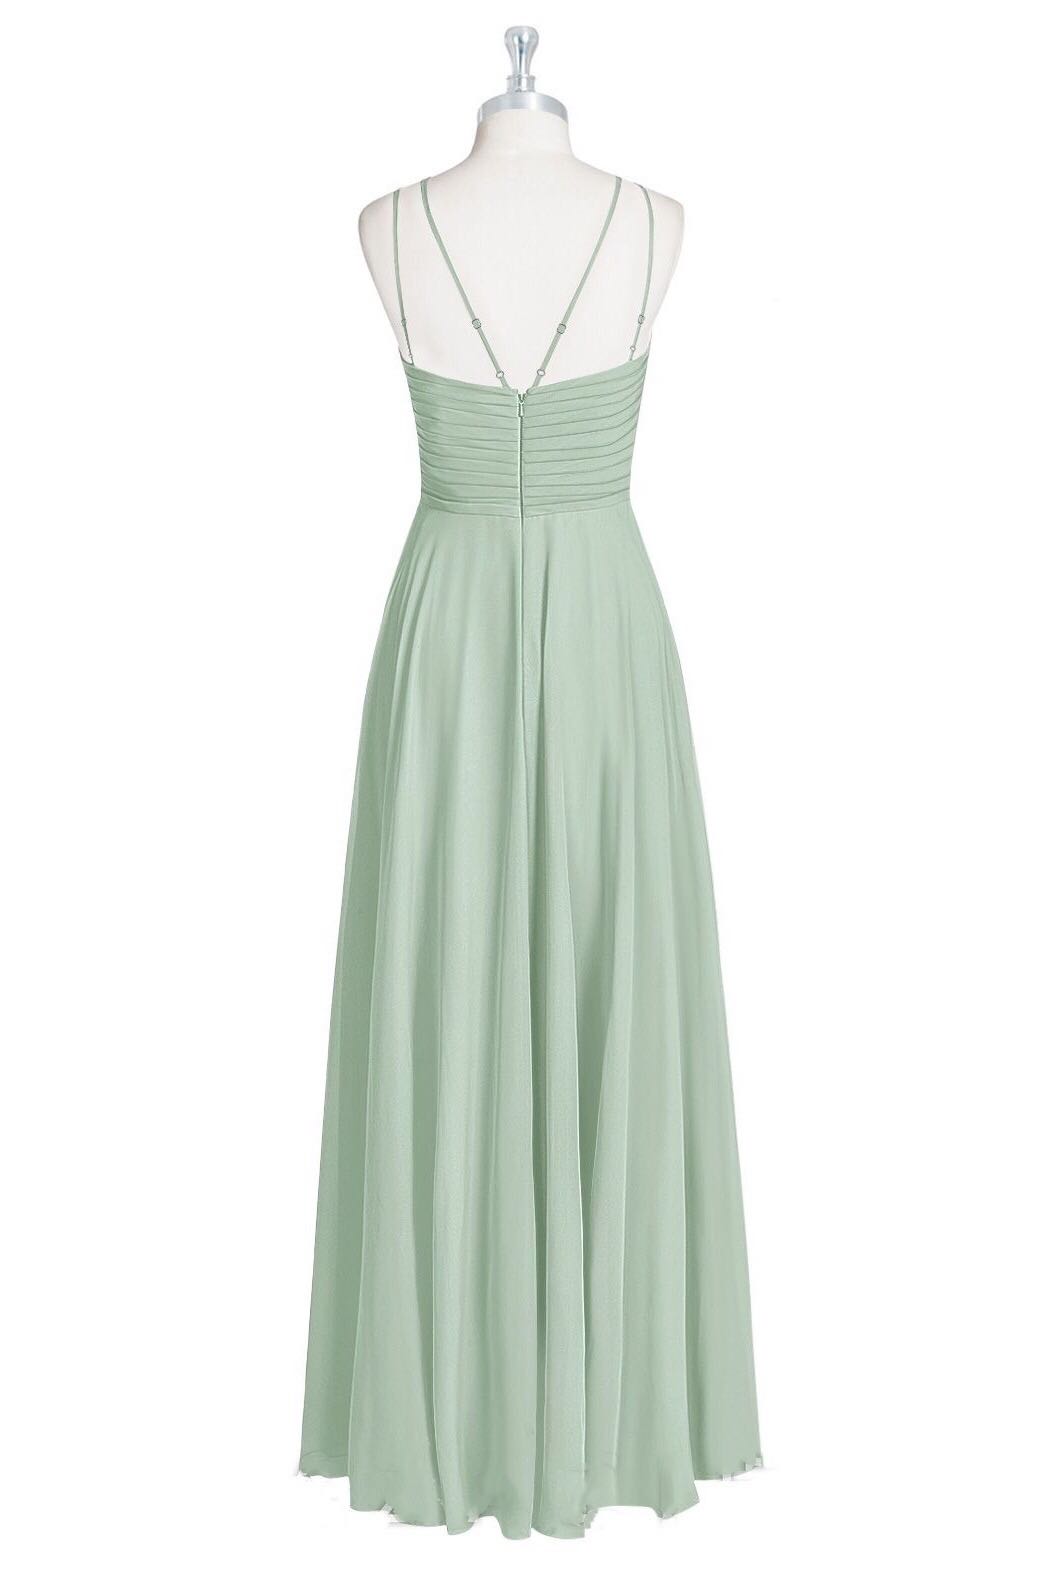 Prom Dress Purple, Sage Green Chiffon Halter A-Line Long Bridesmaid Dress